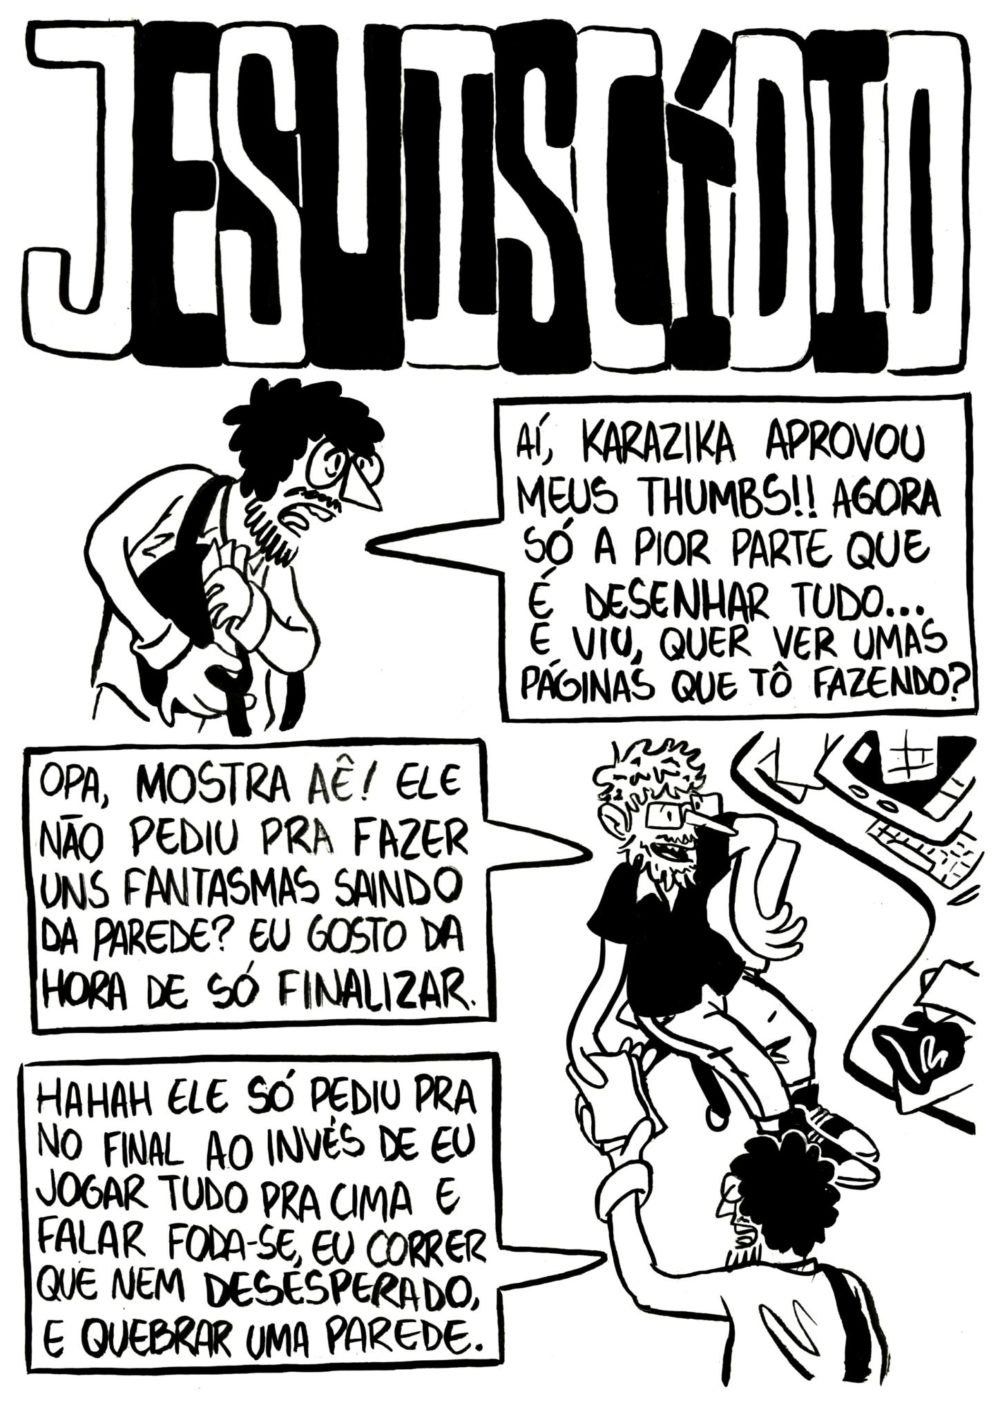 Je Suis Cídio #2, por João B. Godoi